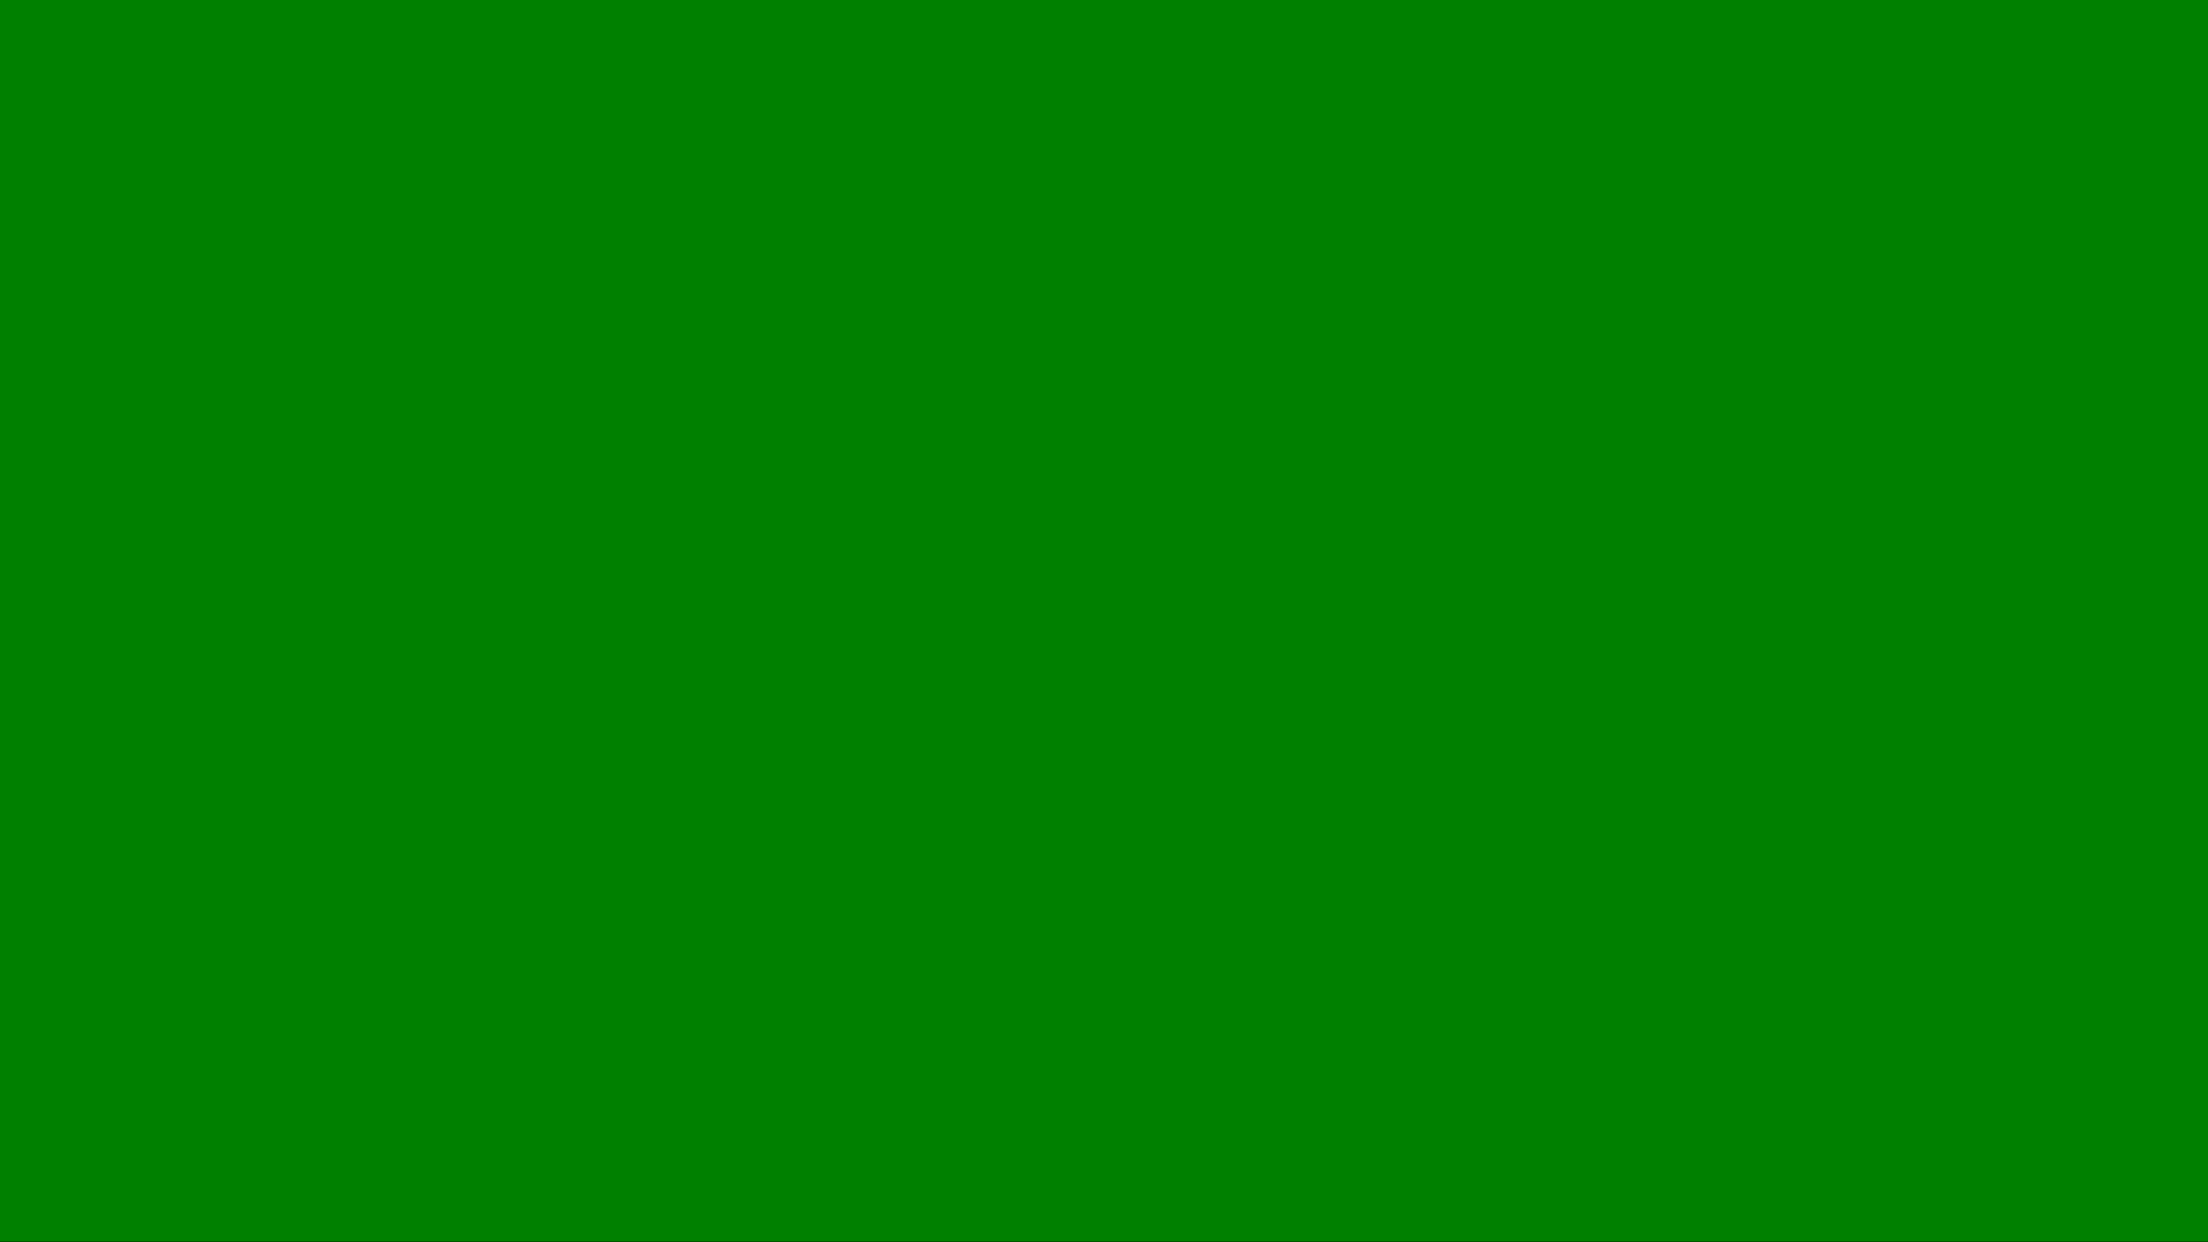 myscreenchecker.com_green_horizontal.PNG